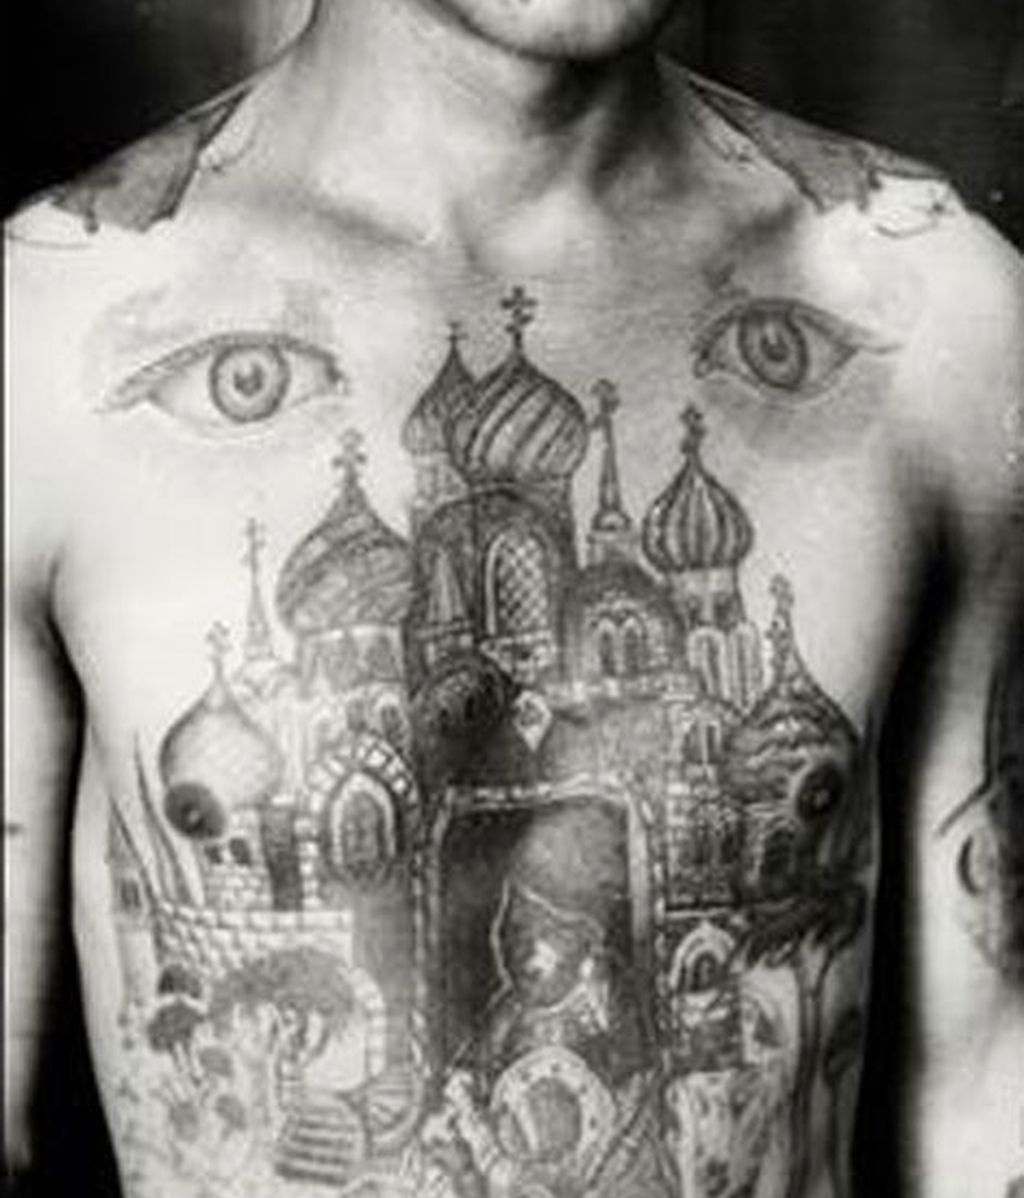 El lenguaje secreto de los tatuajes de los presos